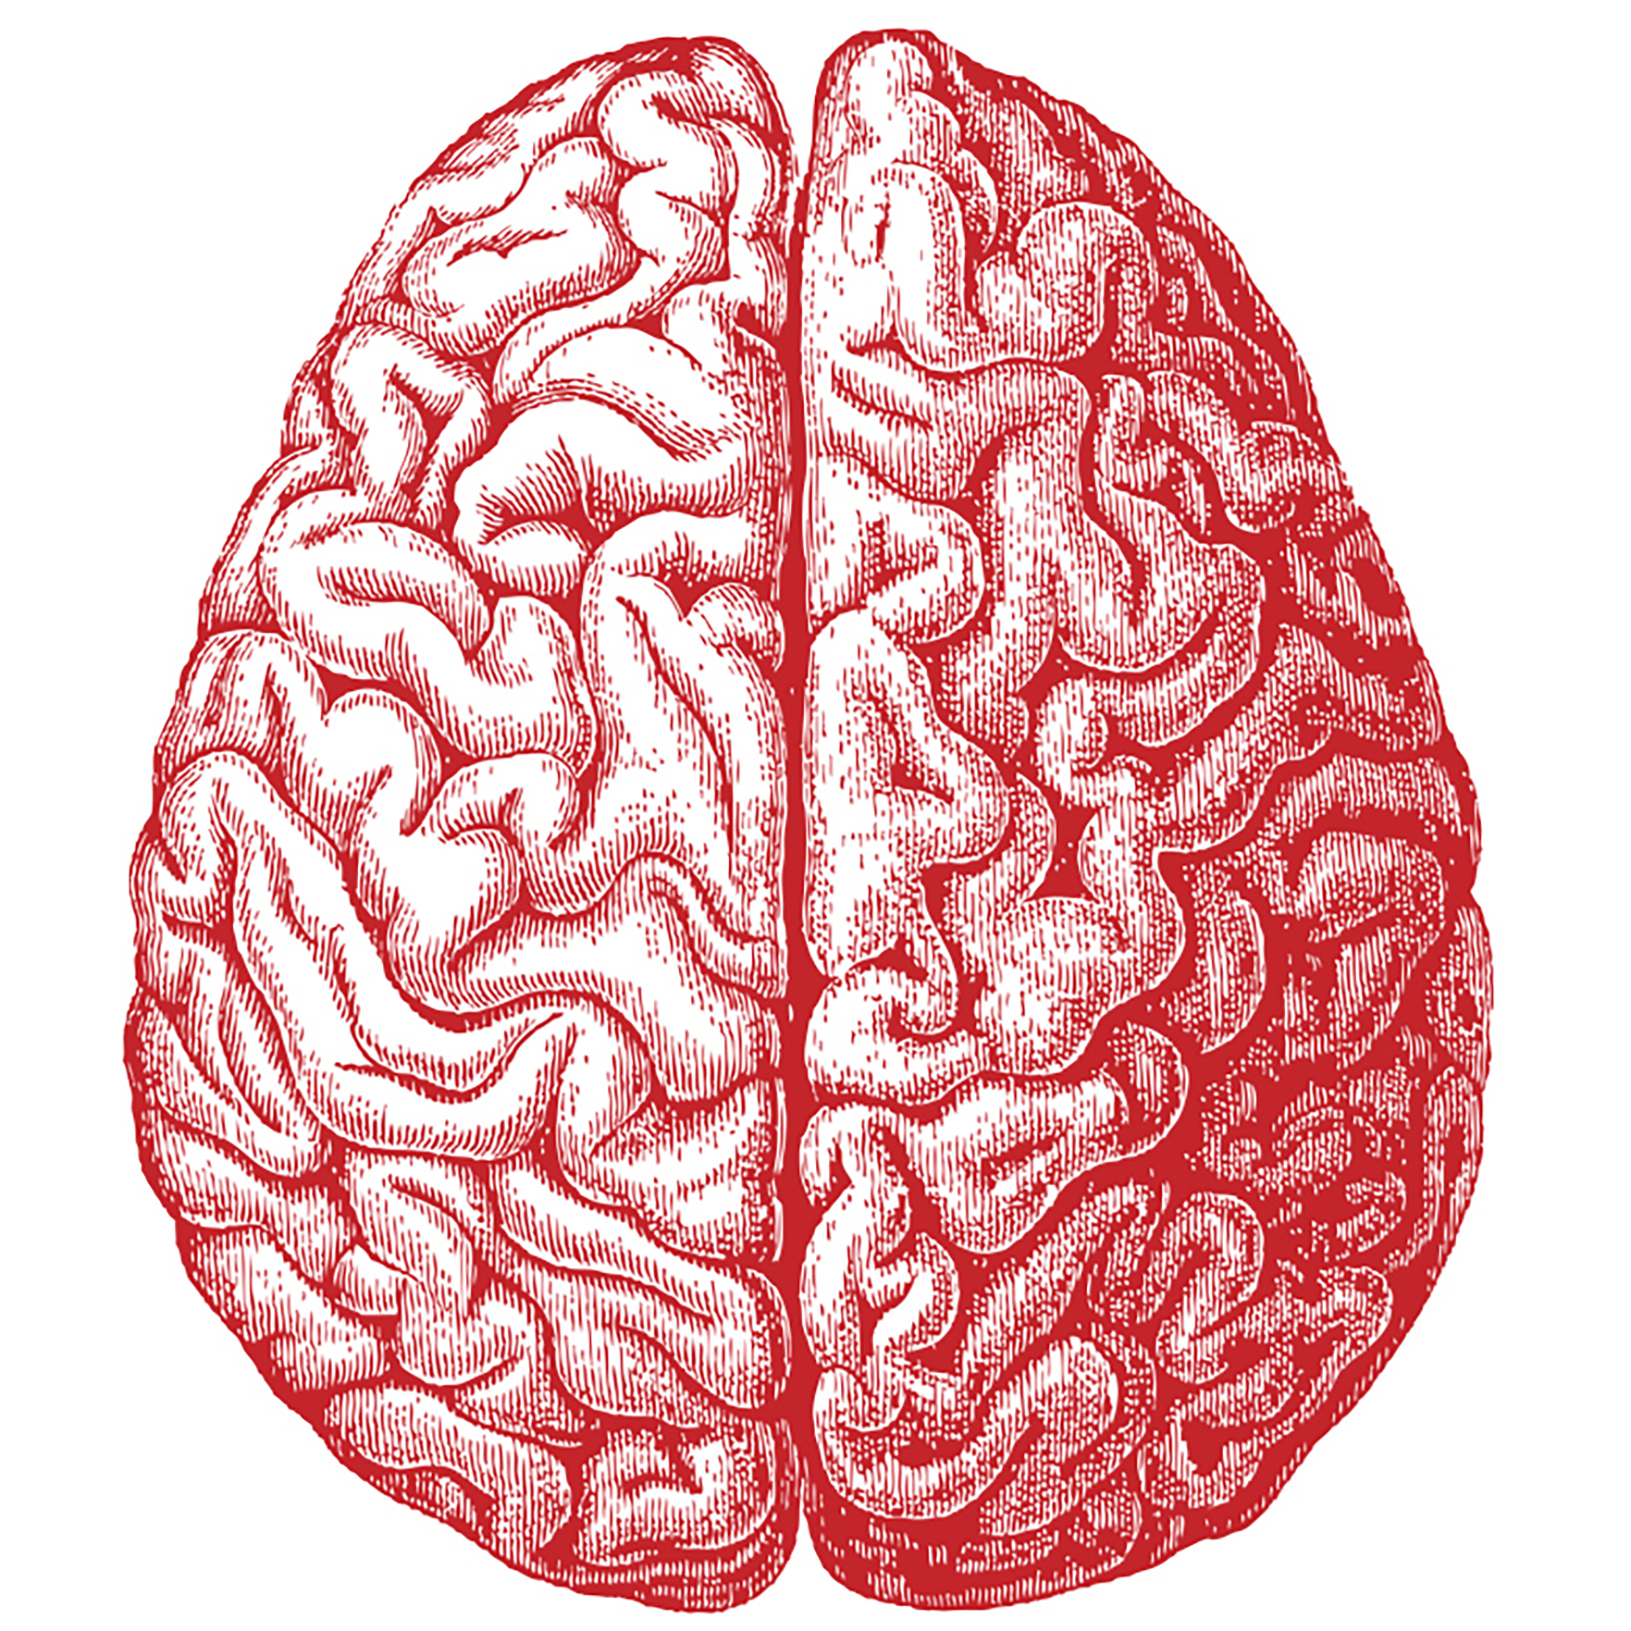 Левое полушарие мозга инсульт. Мозг вид сверху. Полушария мозга.